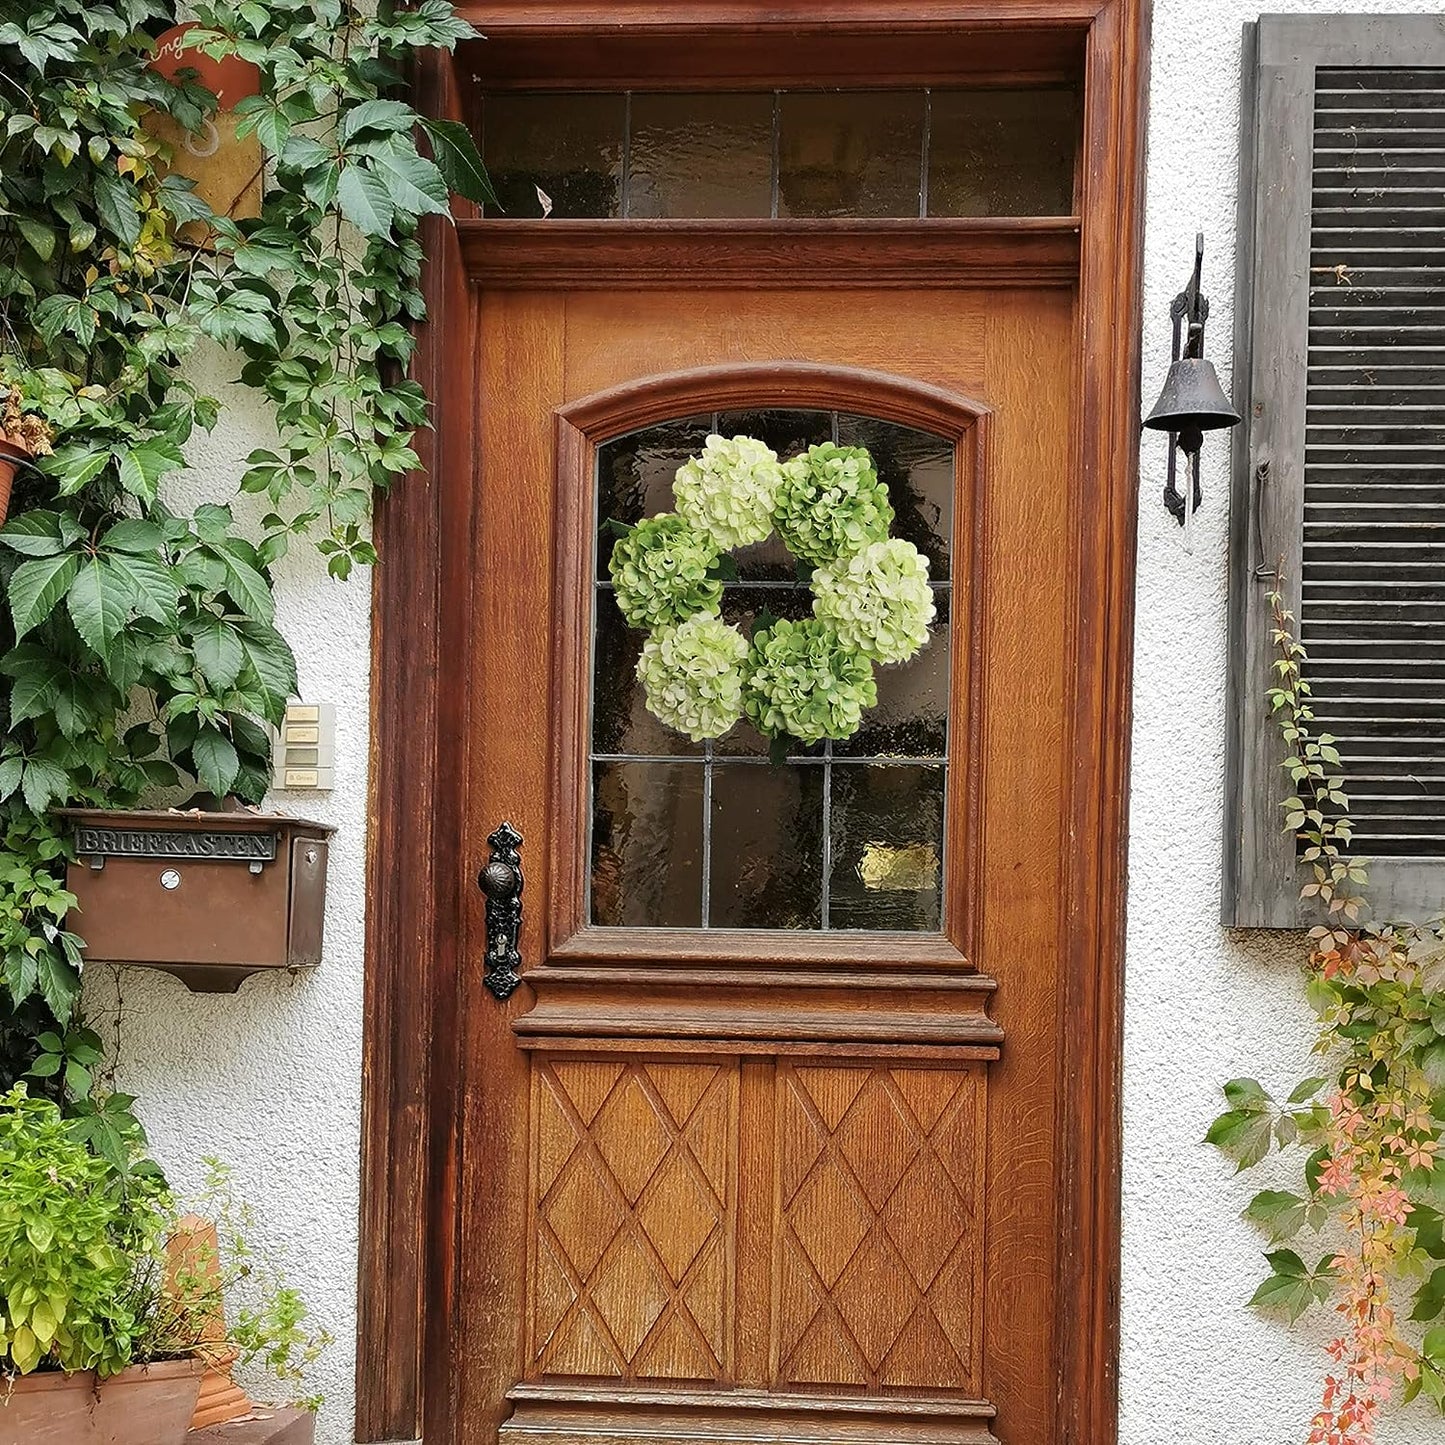 18" Handcrafted Mint & Green Hydrangea Wreath - Elegant Floral Decor for Home & Door